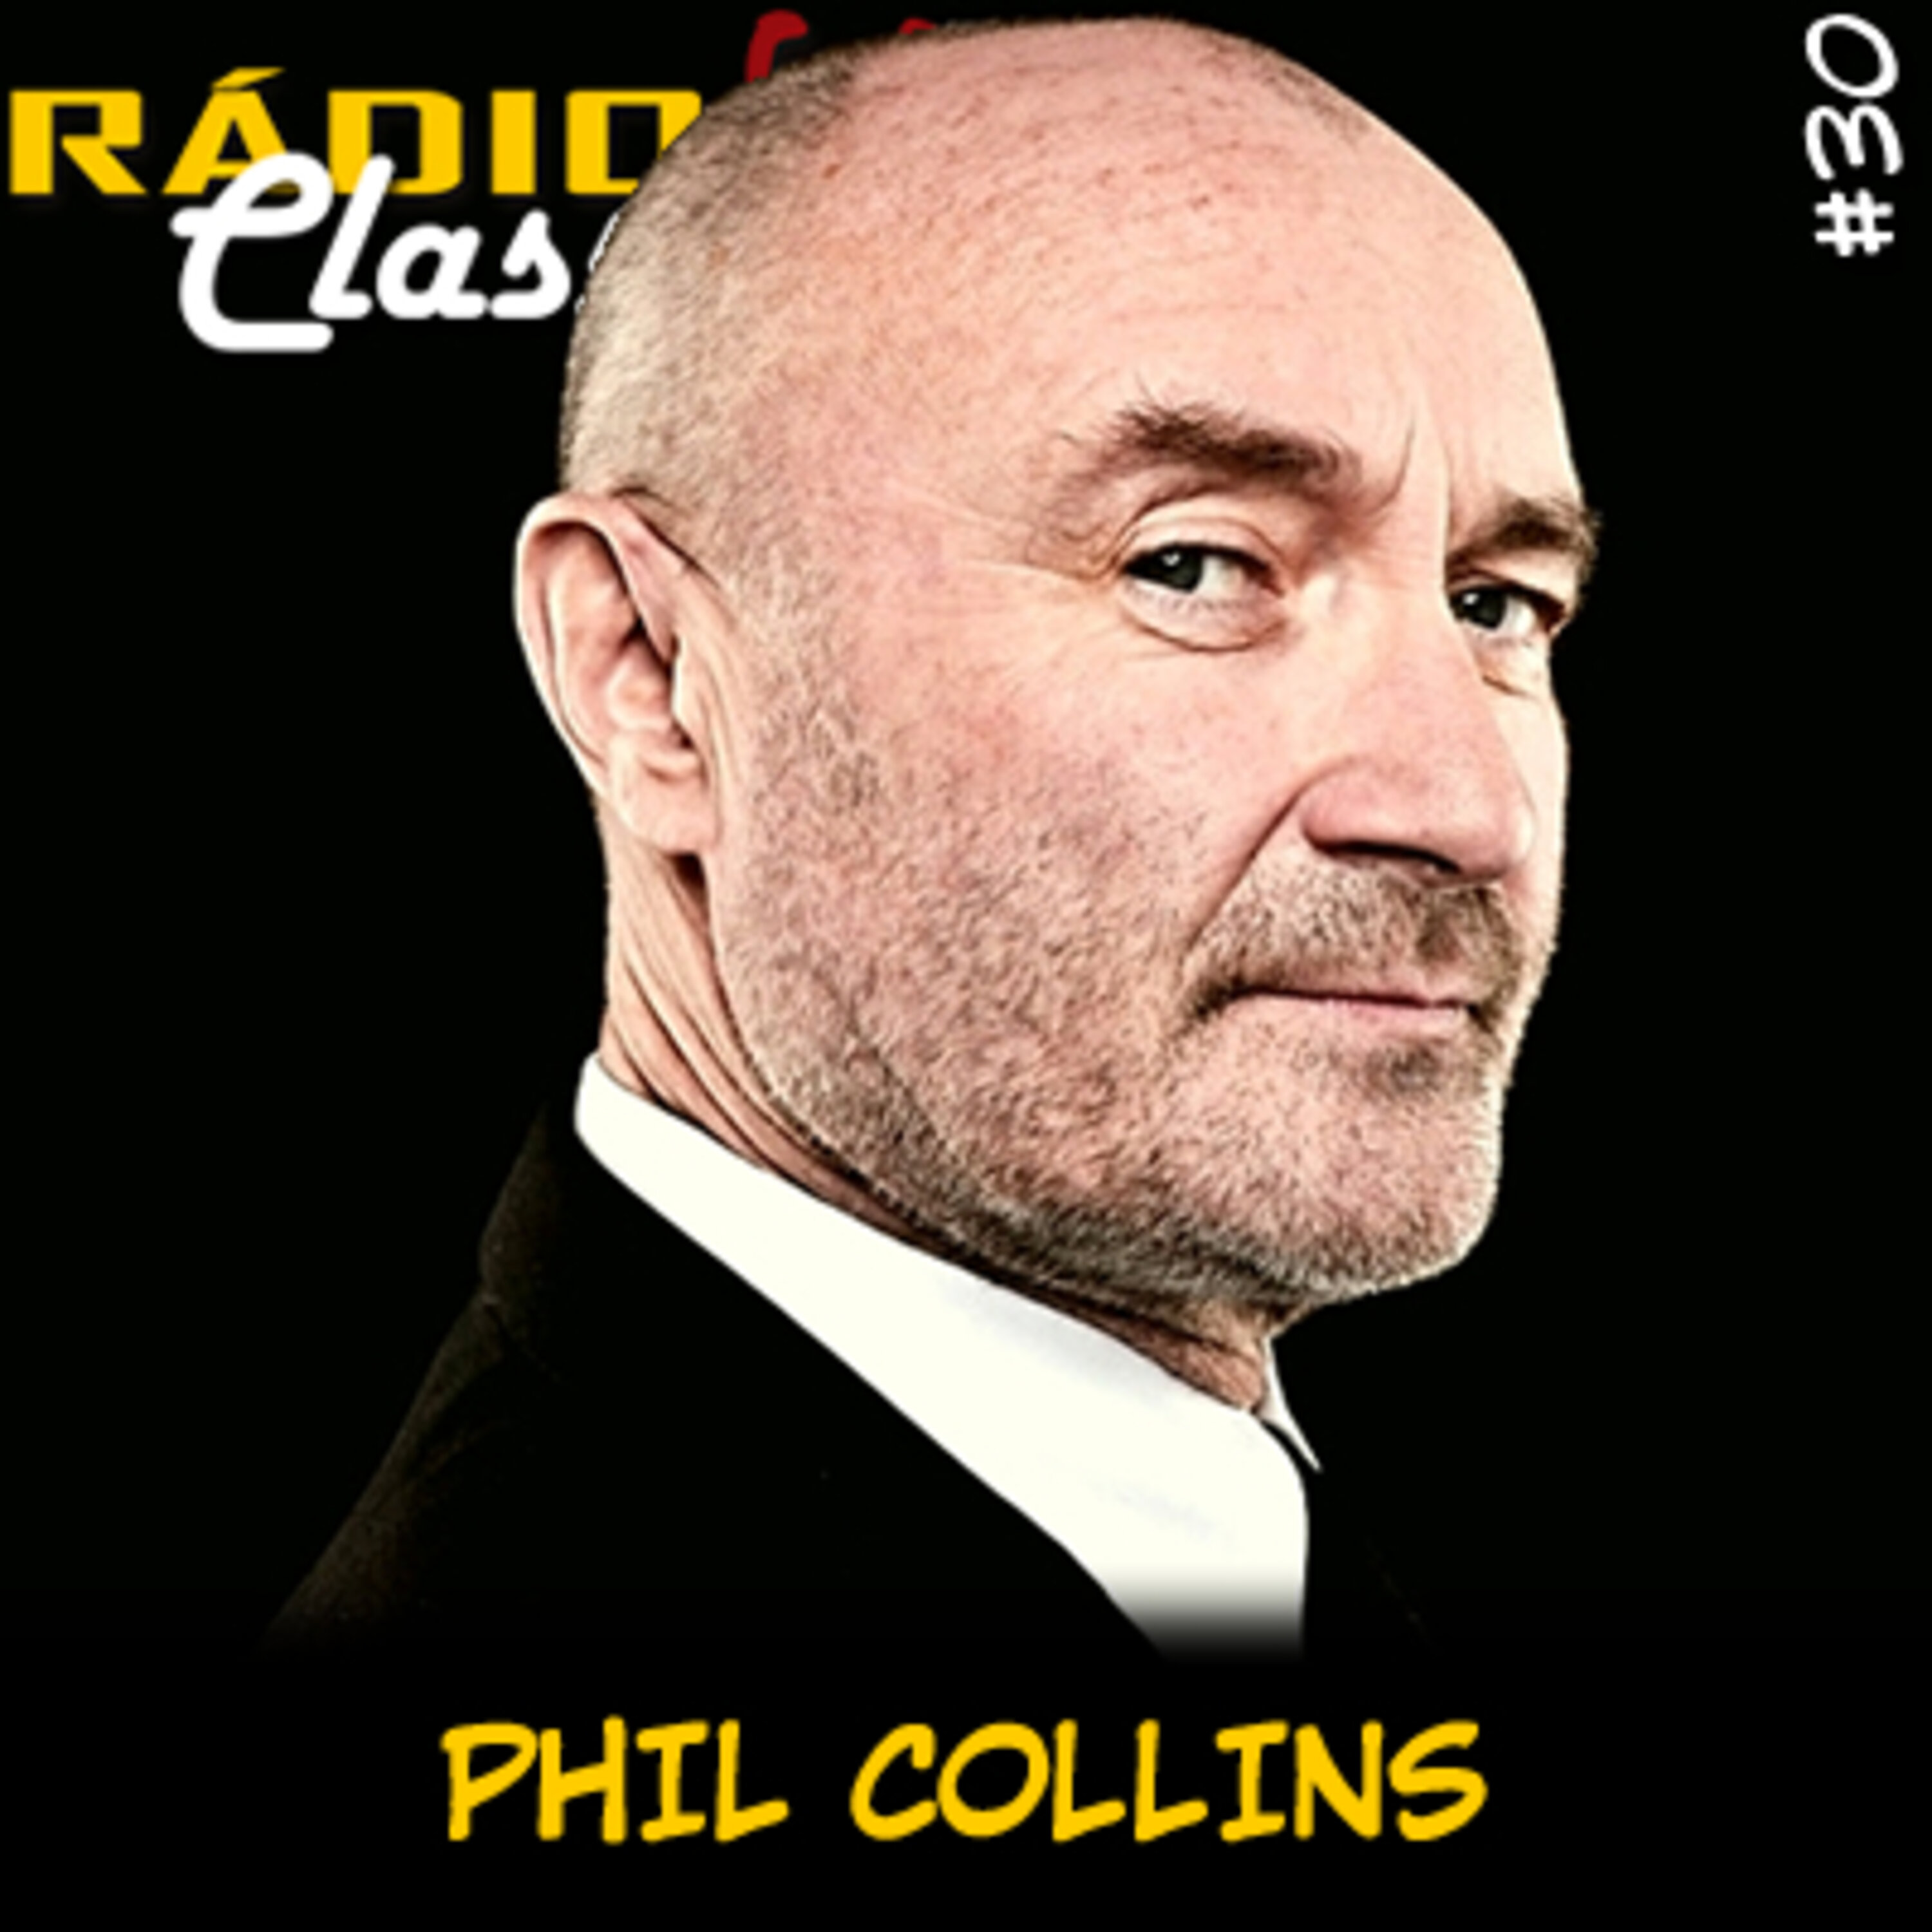 RÁDIOFOBIA Classics #30 – Phil Collins